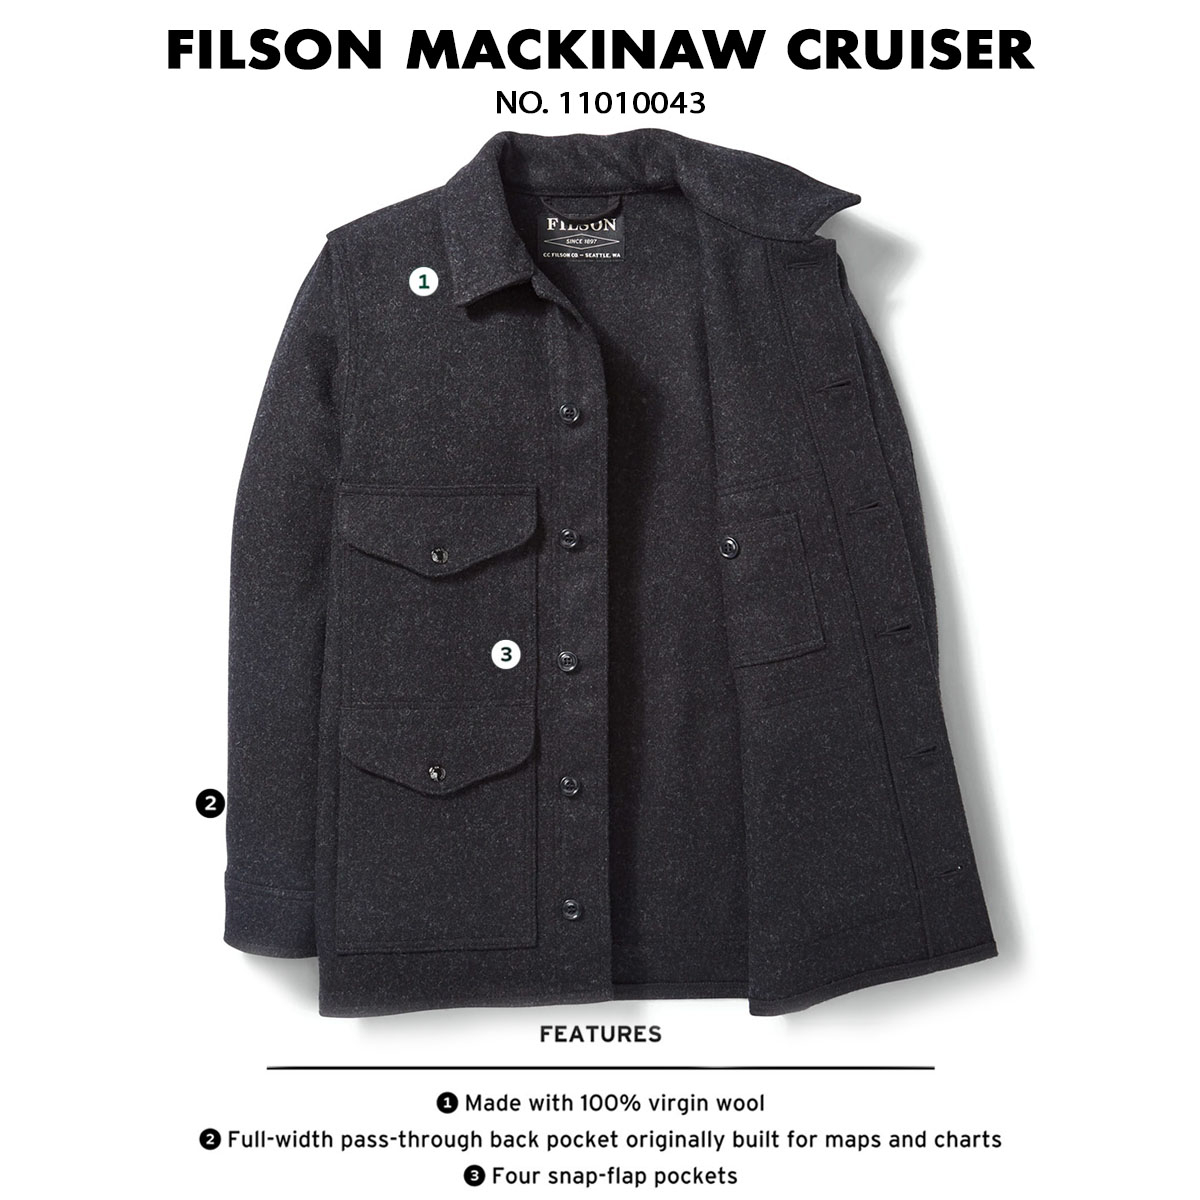 Filson Mackinaw Cruiser Charcoal 11010043, features